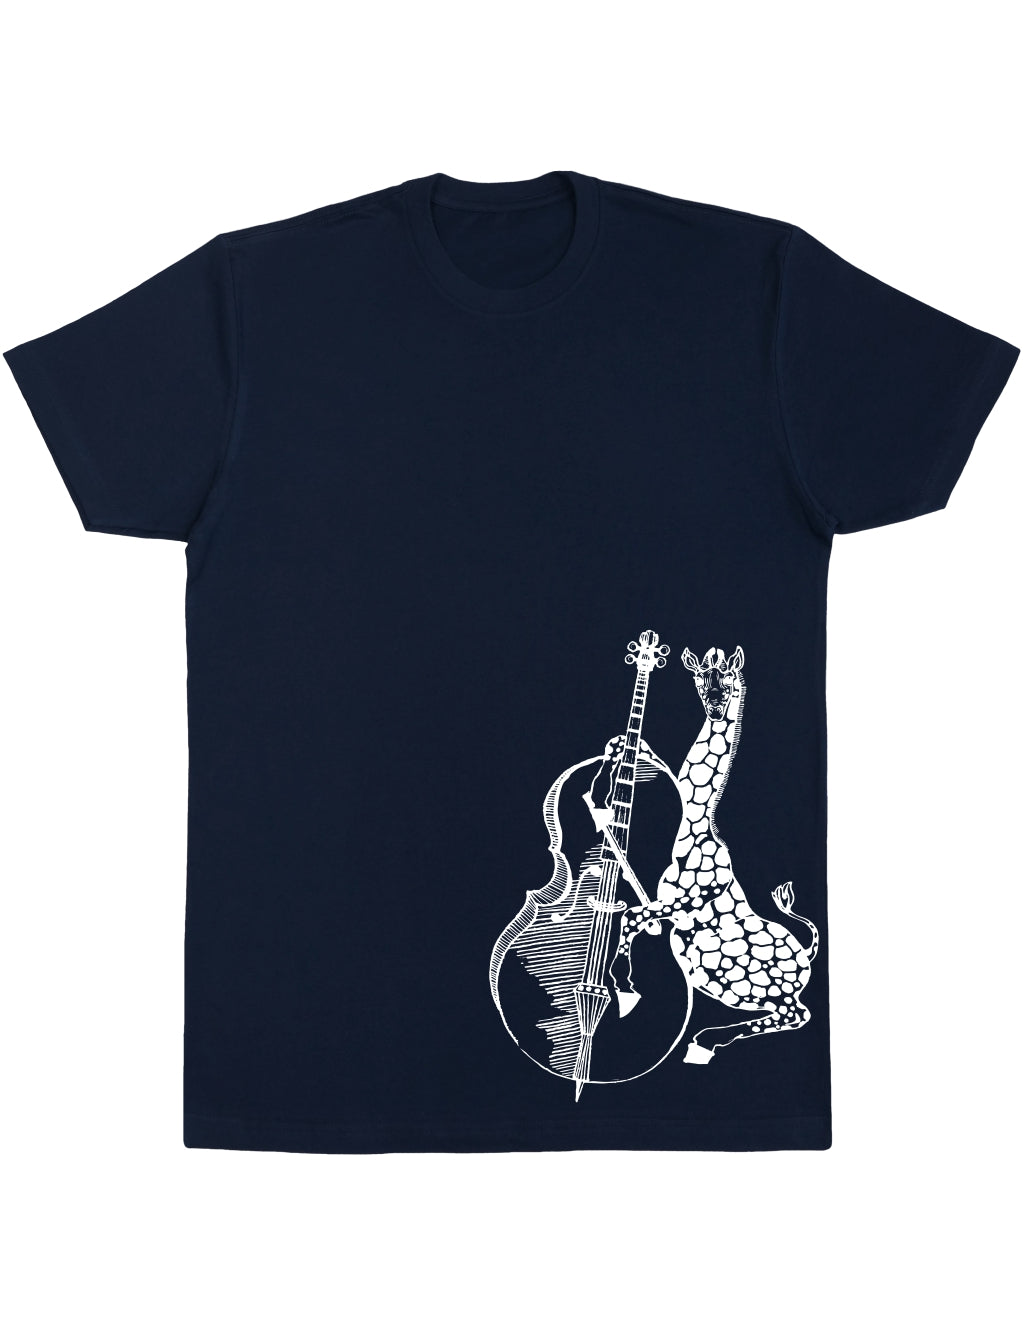 SEEMBO Giraffe Playing Cello Men's Cotton T-Shirt Side Print